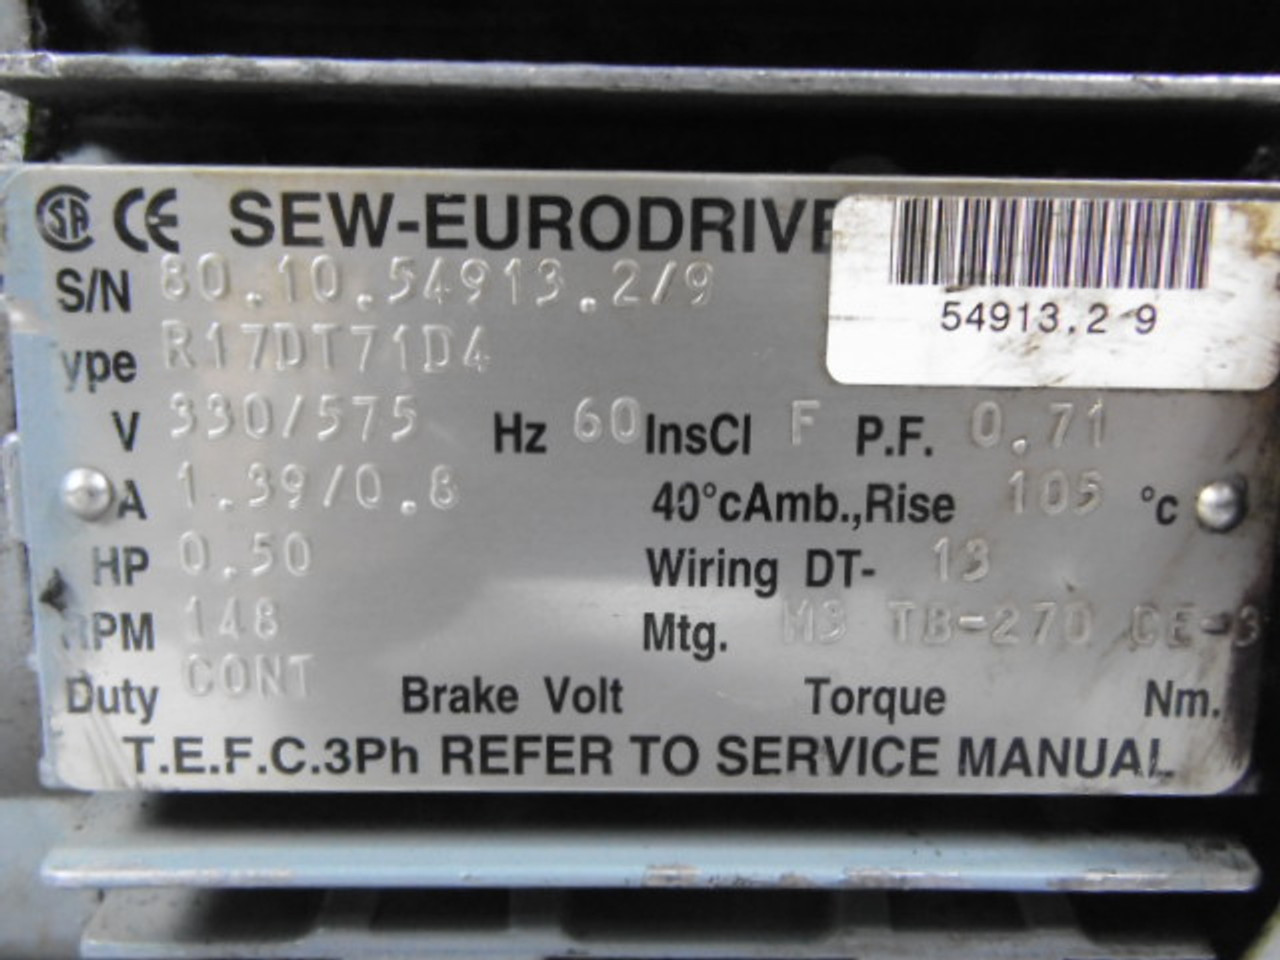 Sew-Eurodrive Gear Motor 0.5HP 148RPM 330/575V TEFC 1.39/0.8A 60Hz USED